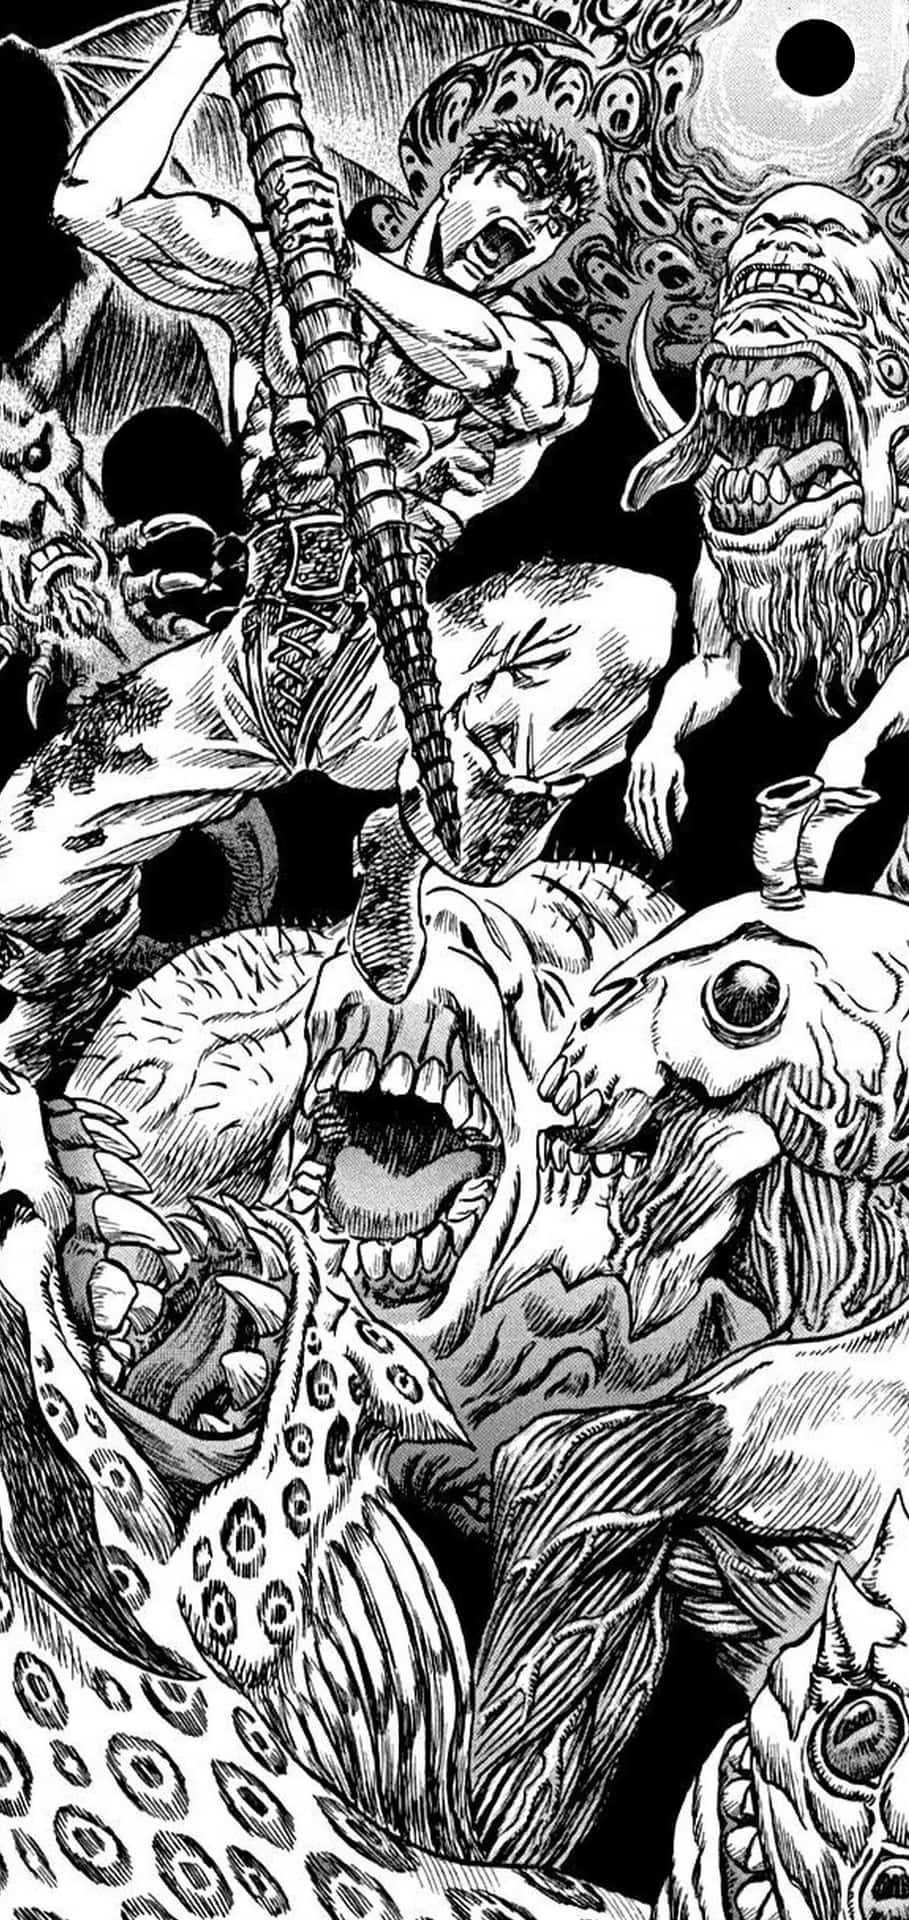 "Guts, the Black Swordsman of Berserk Manga" Wallpaper